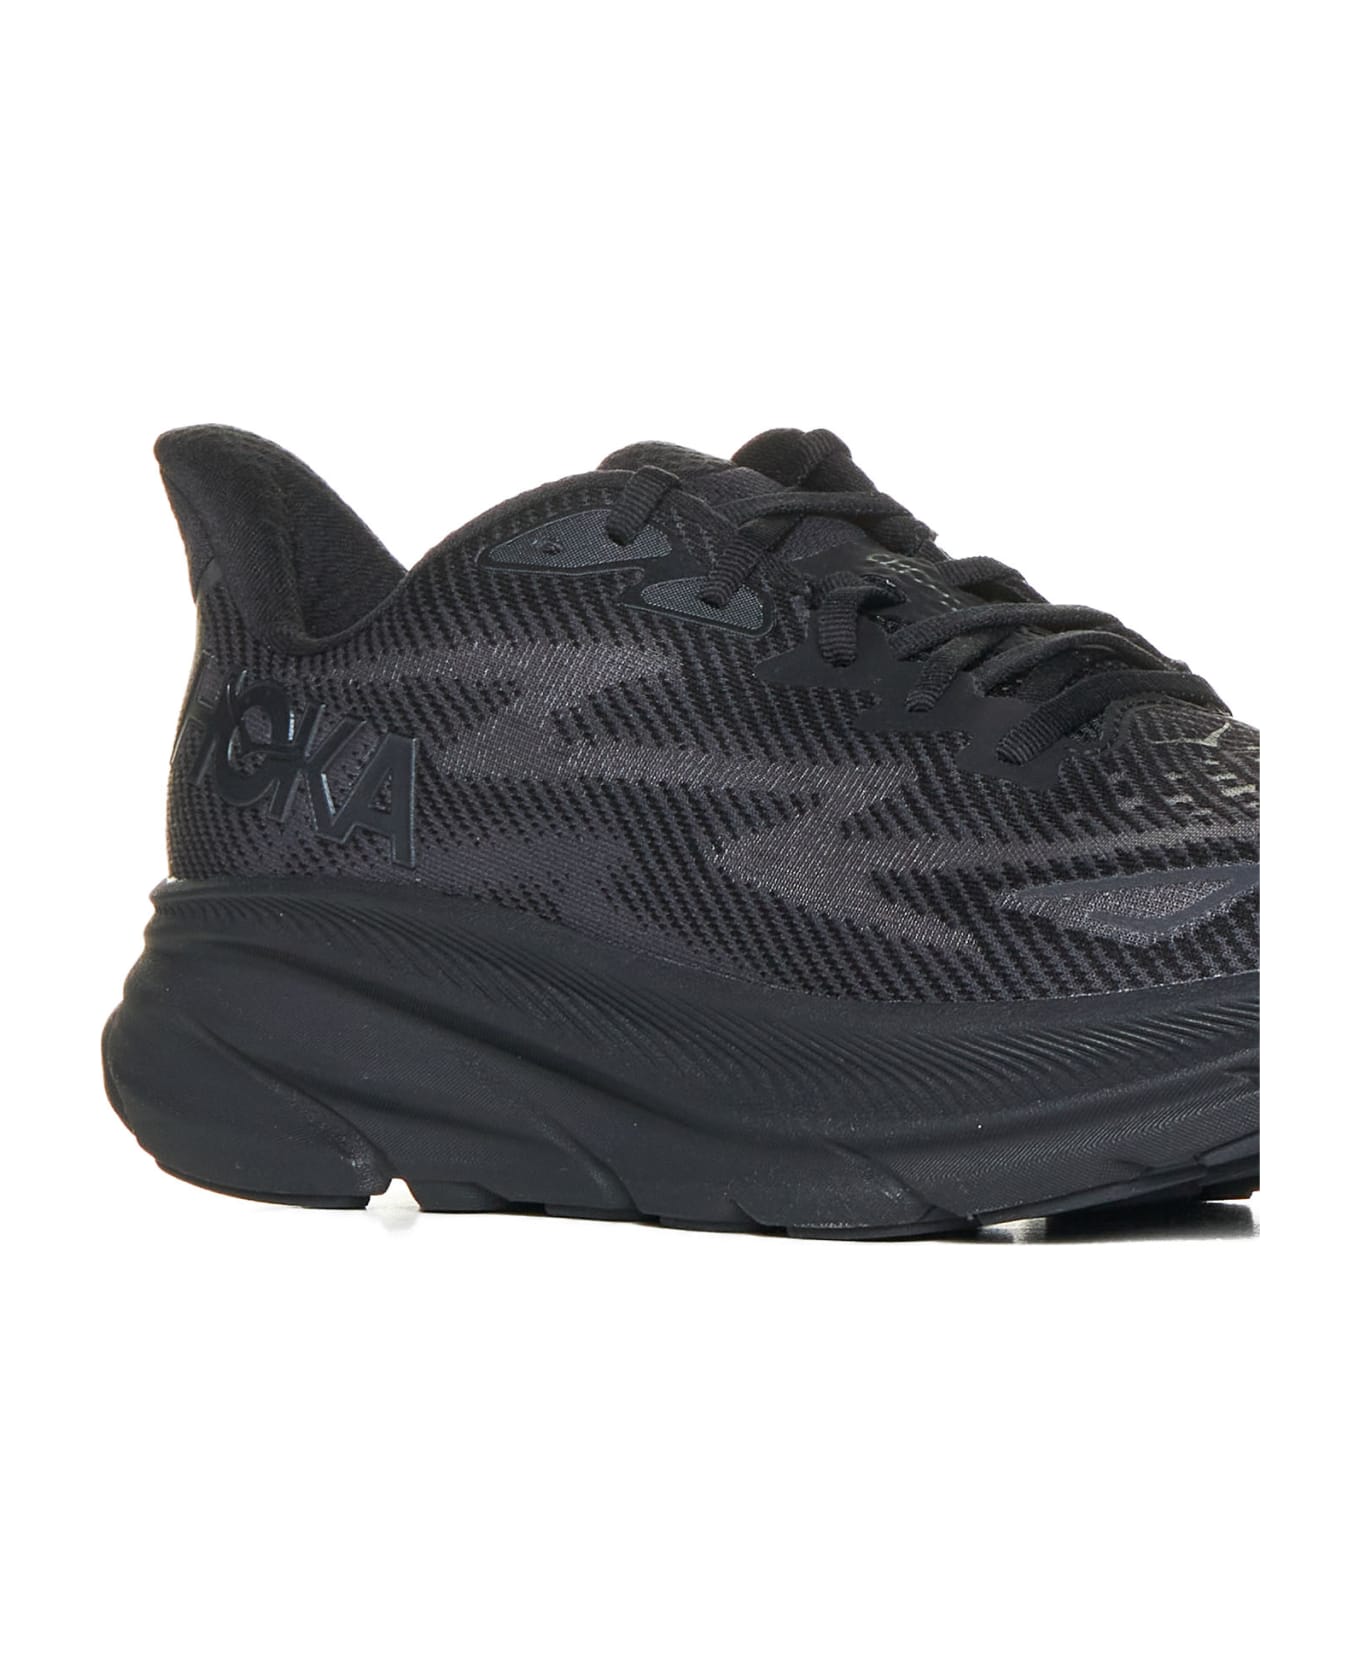 Hoka Sneakers - Black black